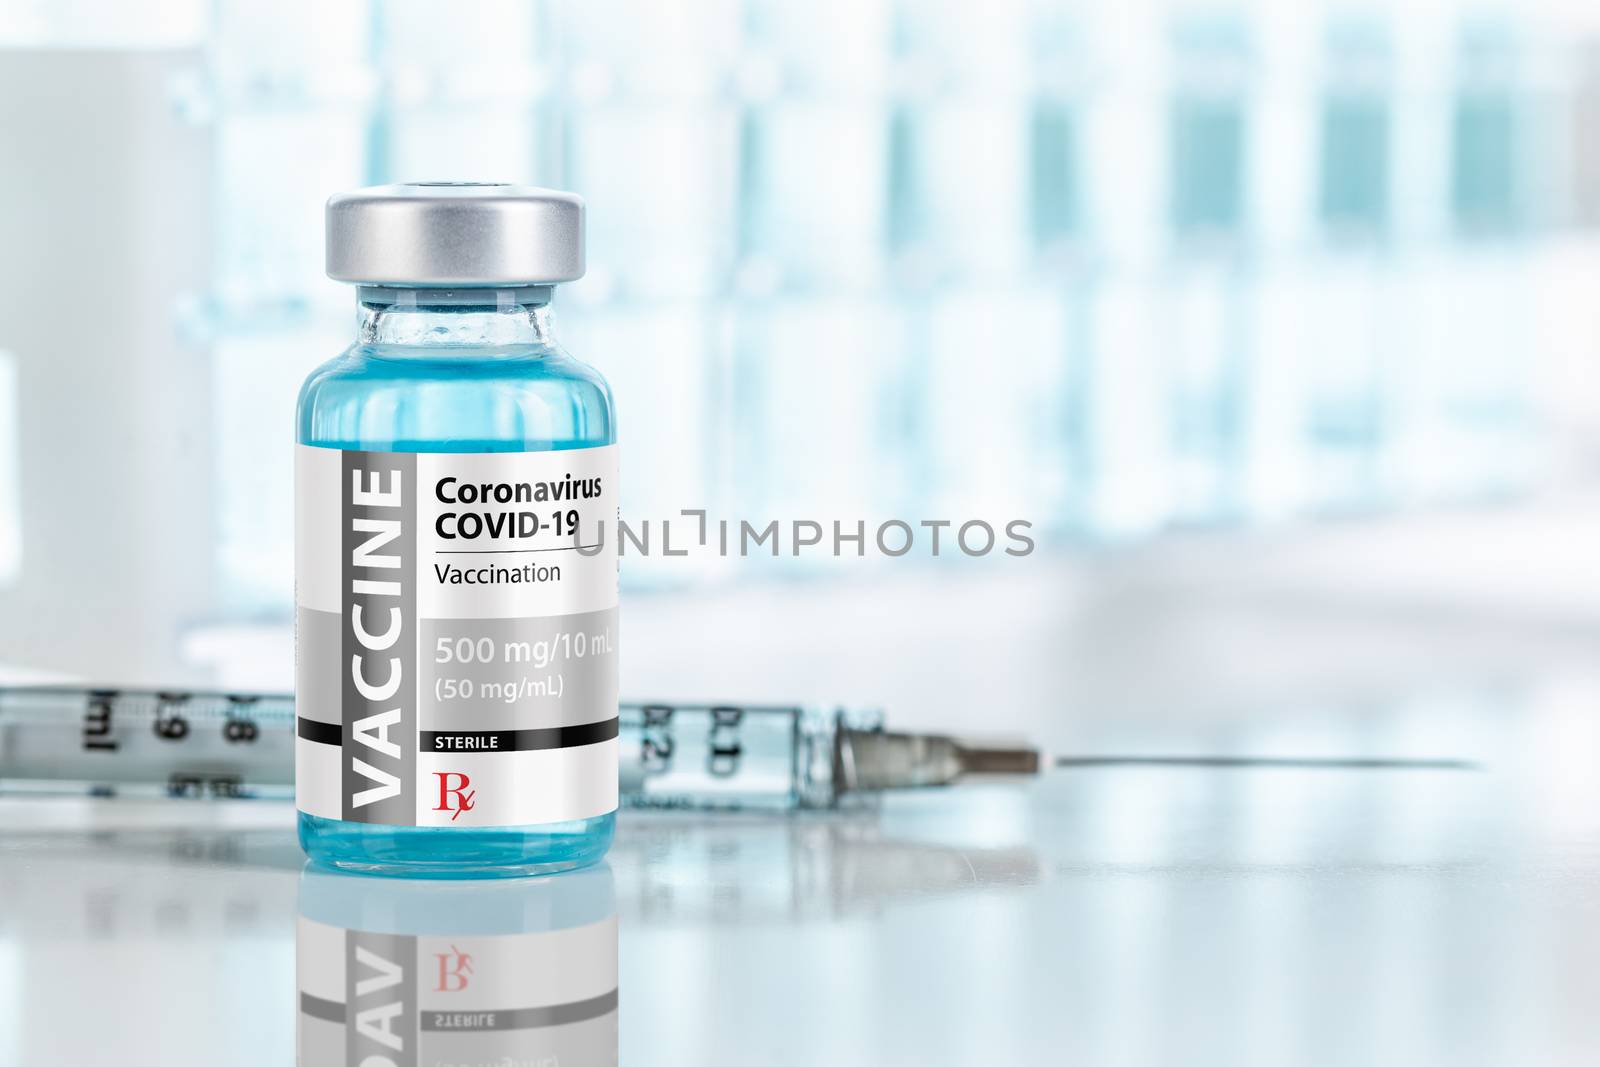 Coronavirus COVID-19 Vaccine Vial and Syringes On Reflective Surface Near Test Tubes.